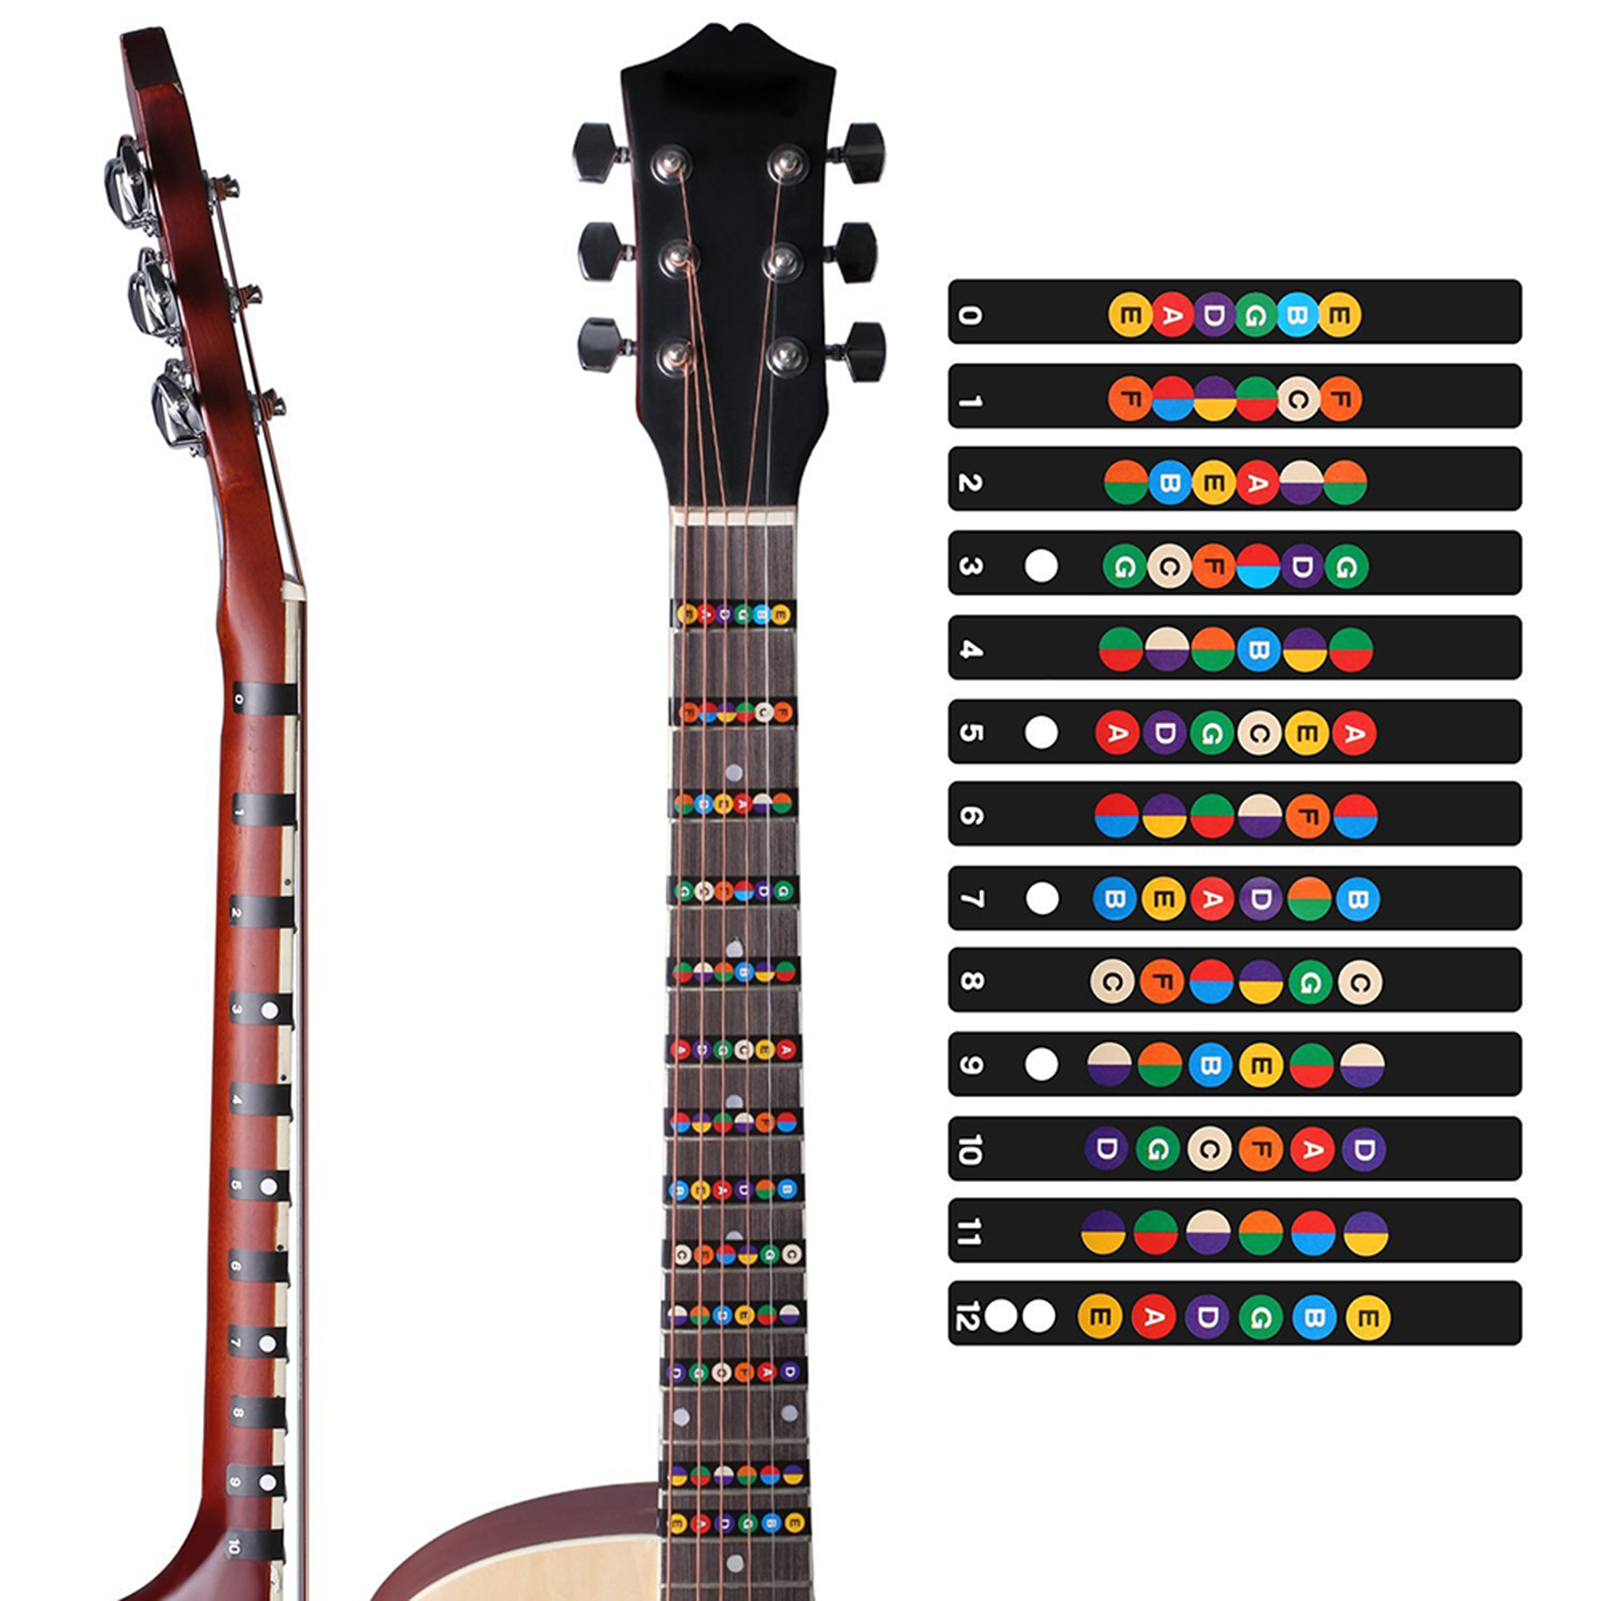 Anself Innovative Guitar Fretboard Note Decals Fingerboard Frets Map Sticker for Beginner Learner - image 1 of 5